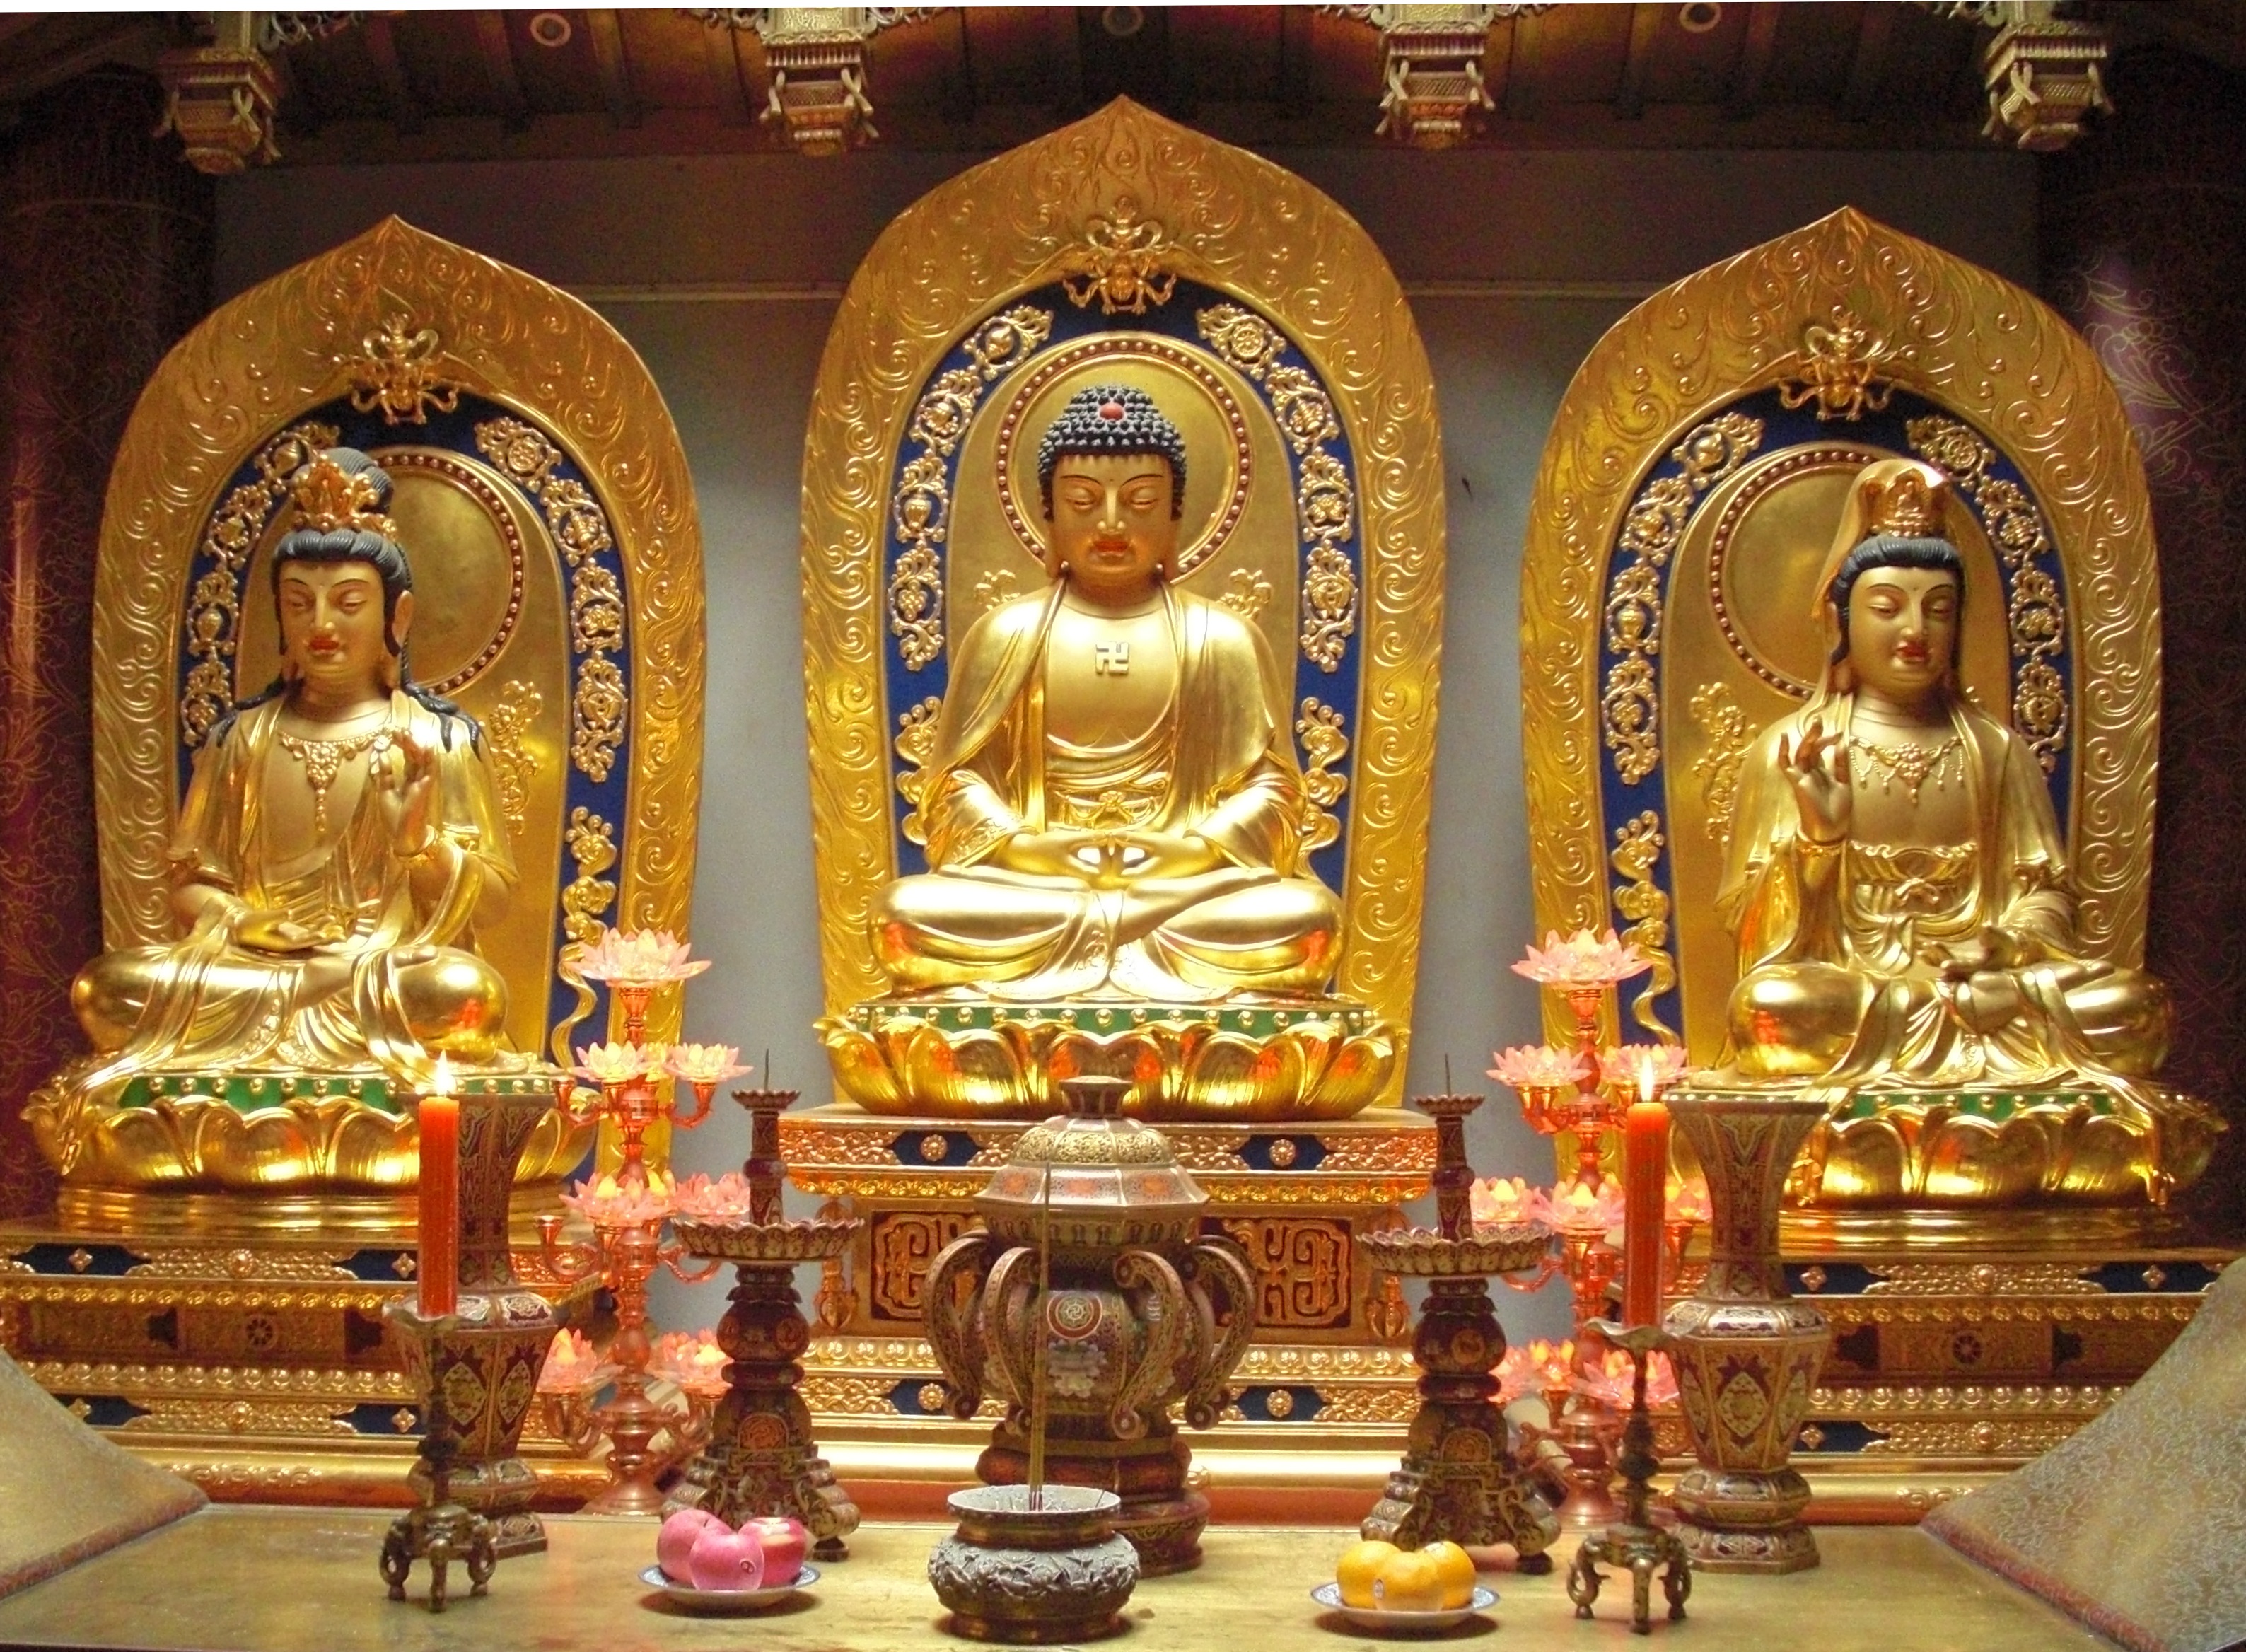 https://upload.wikimedia.org/wikipedia/commons/a/ae/Amitabha_Buddha_and_Bodhisattvas.jpeg